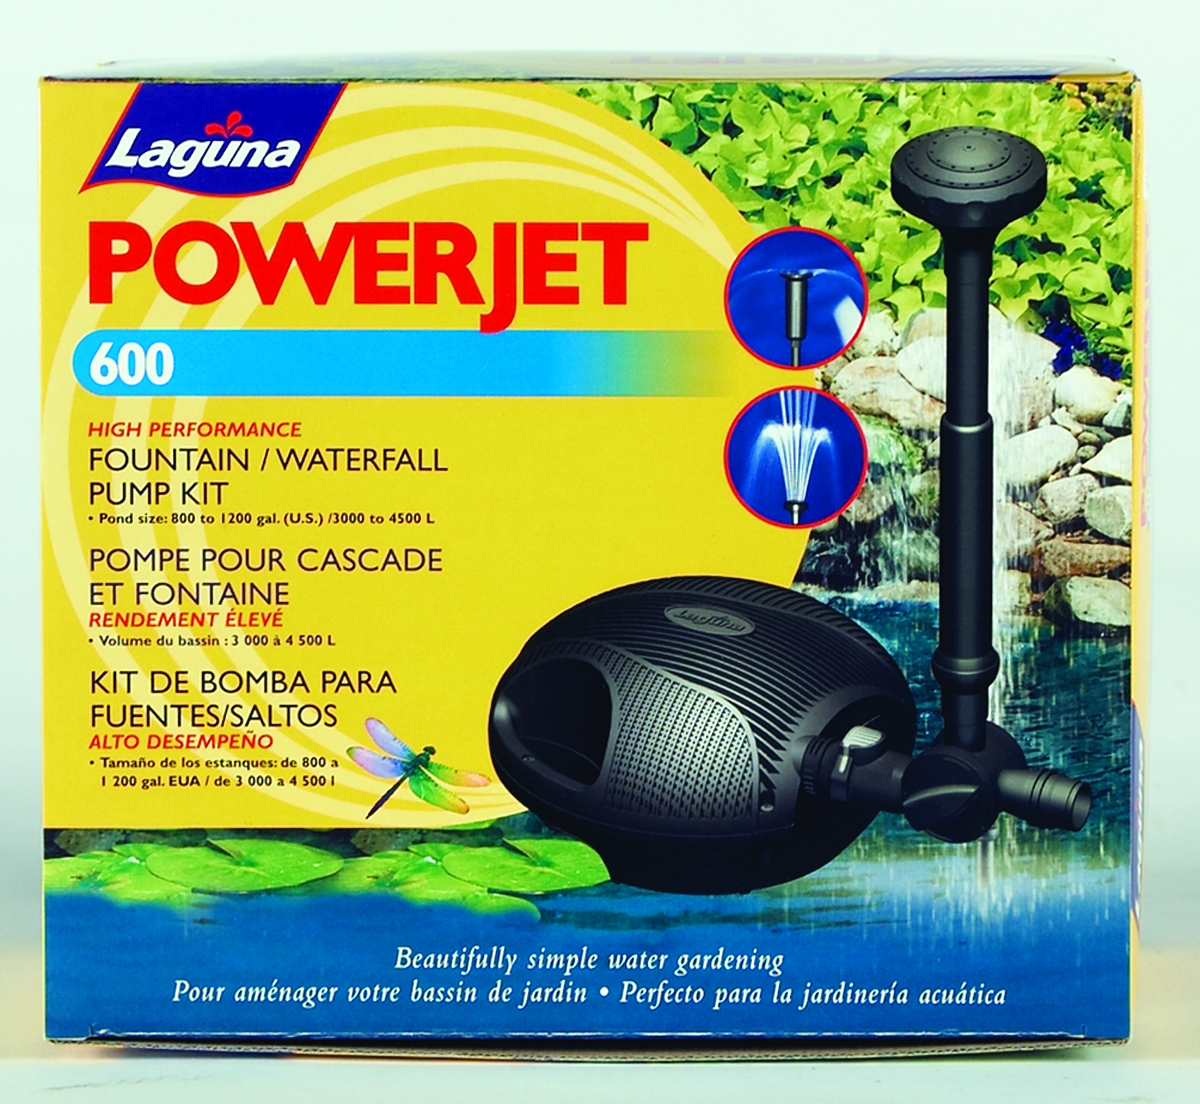 LAGUNA POWERJET 600 FOUNTAIN/WATERFALL PUMP KIT